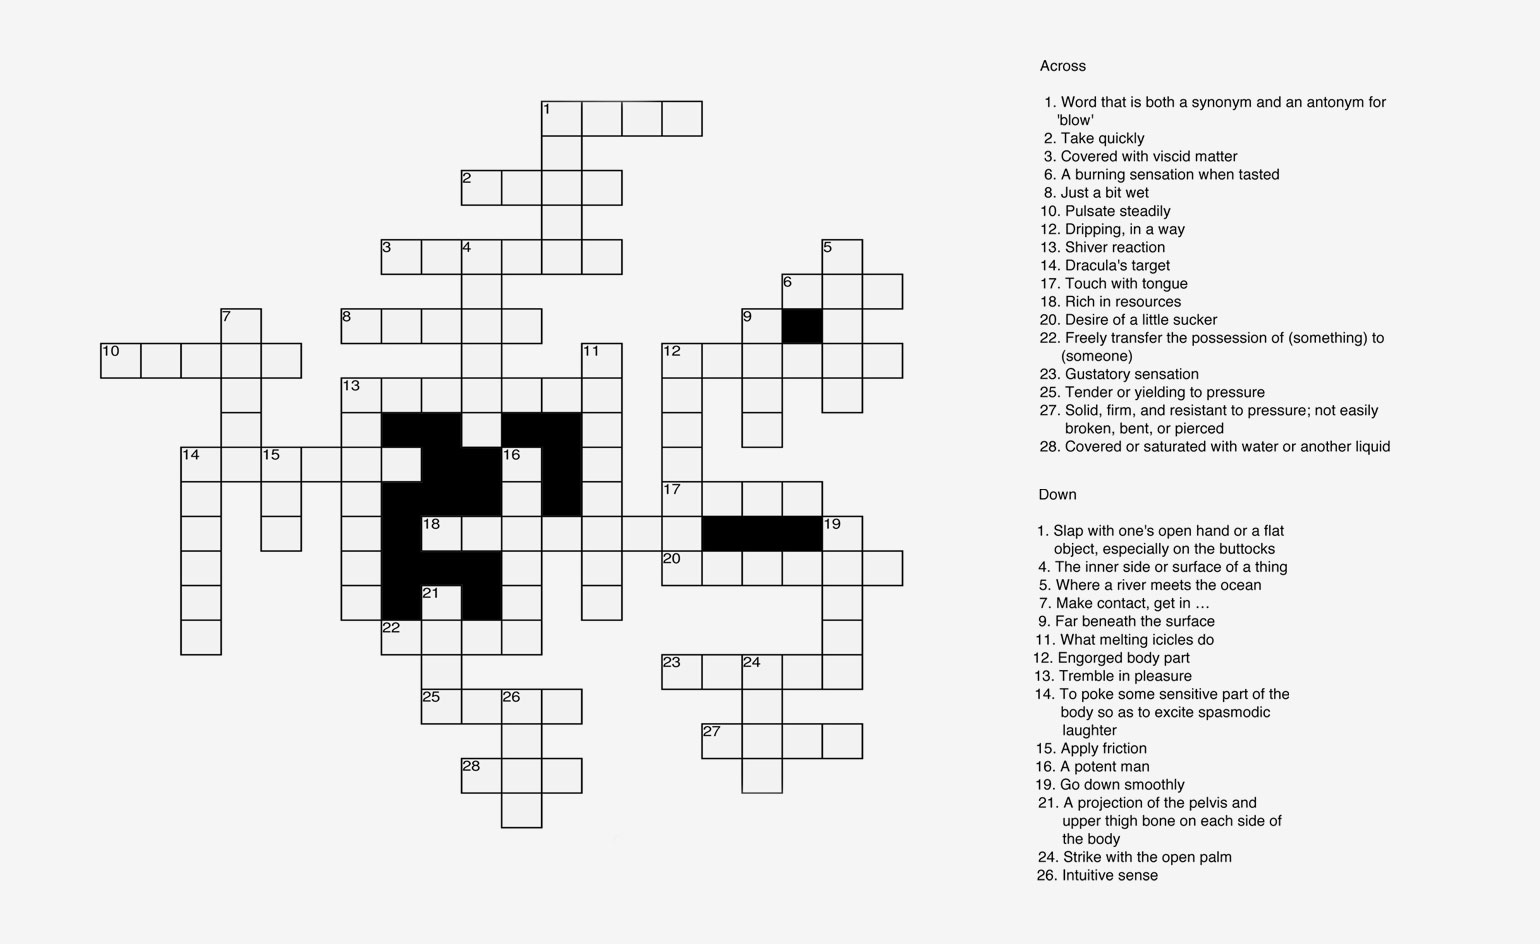 annette landers share blow it crossword clue photos